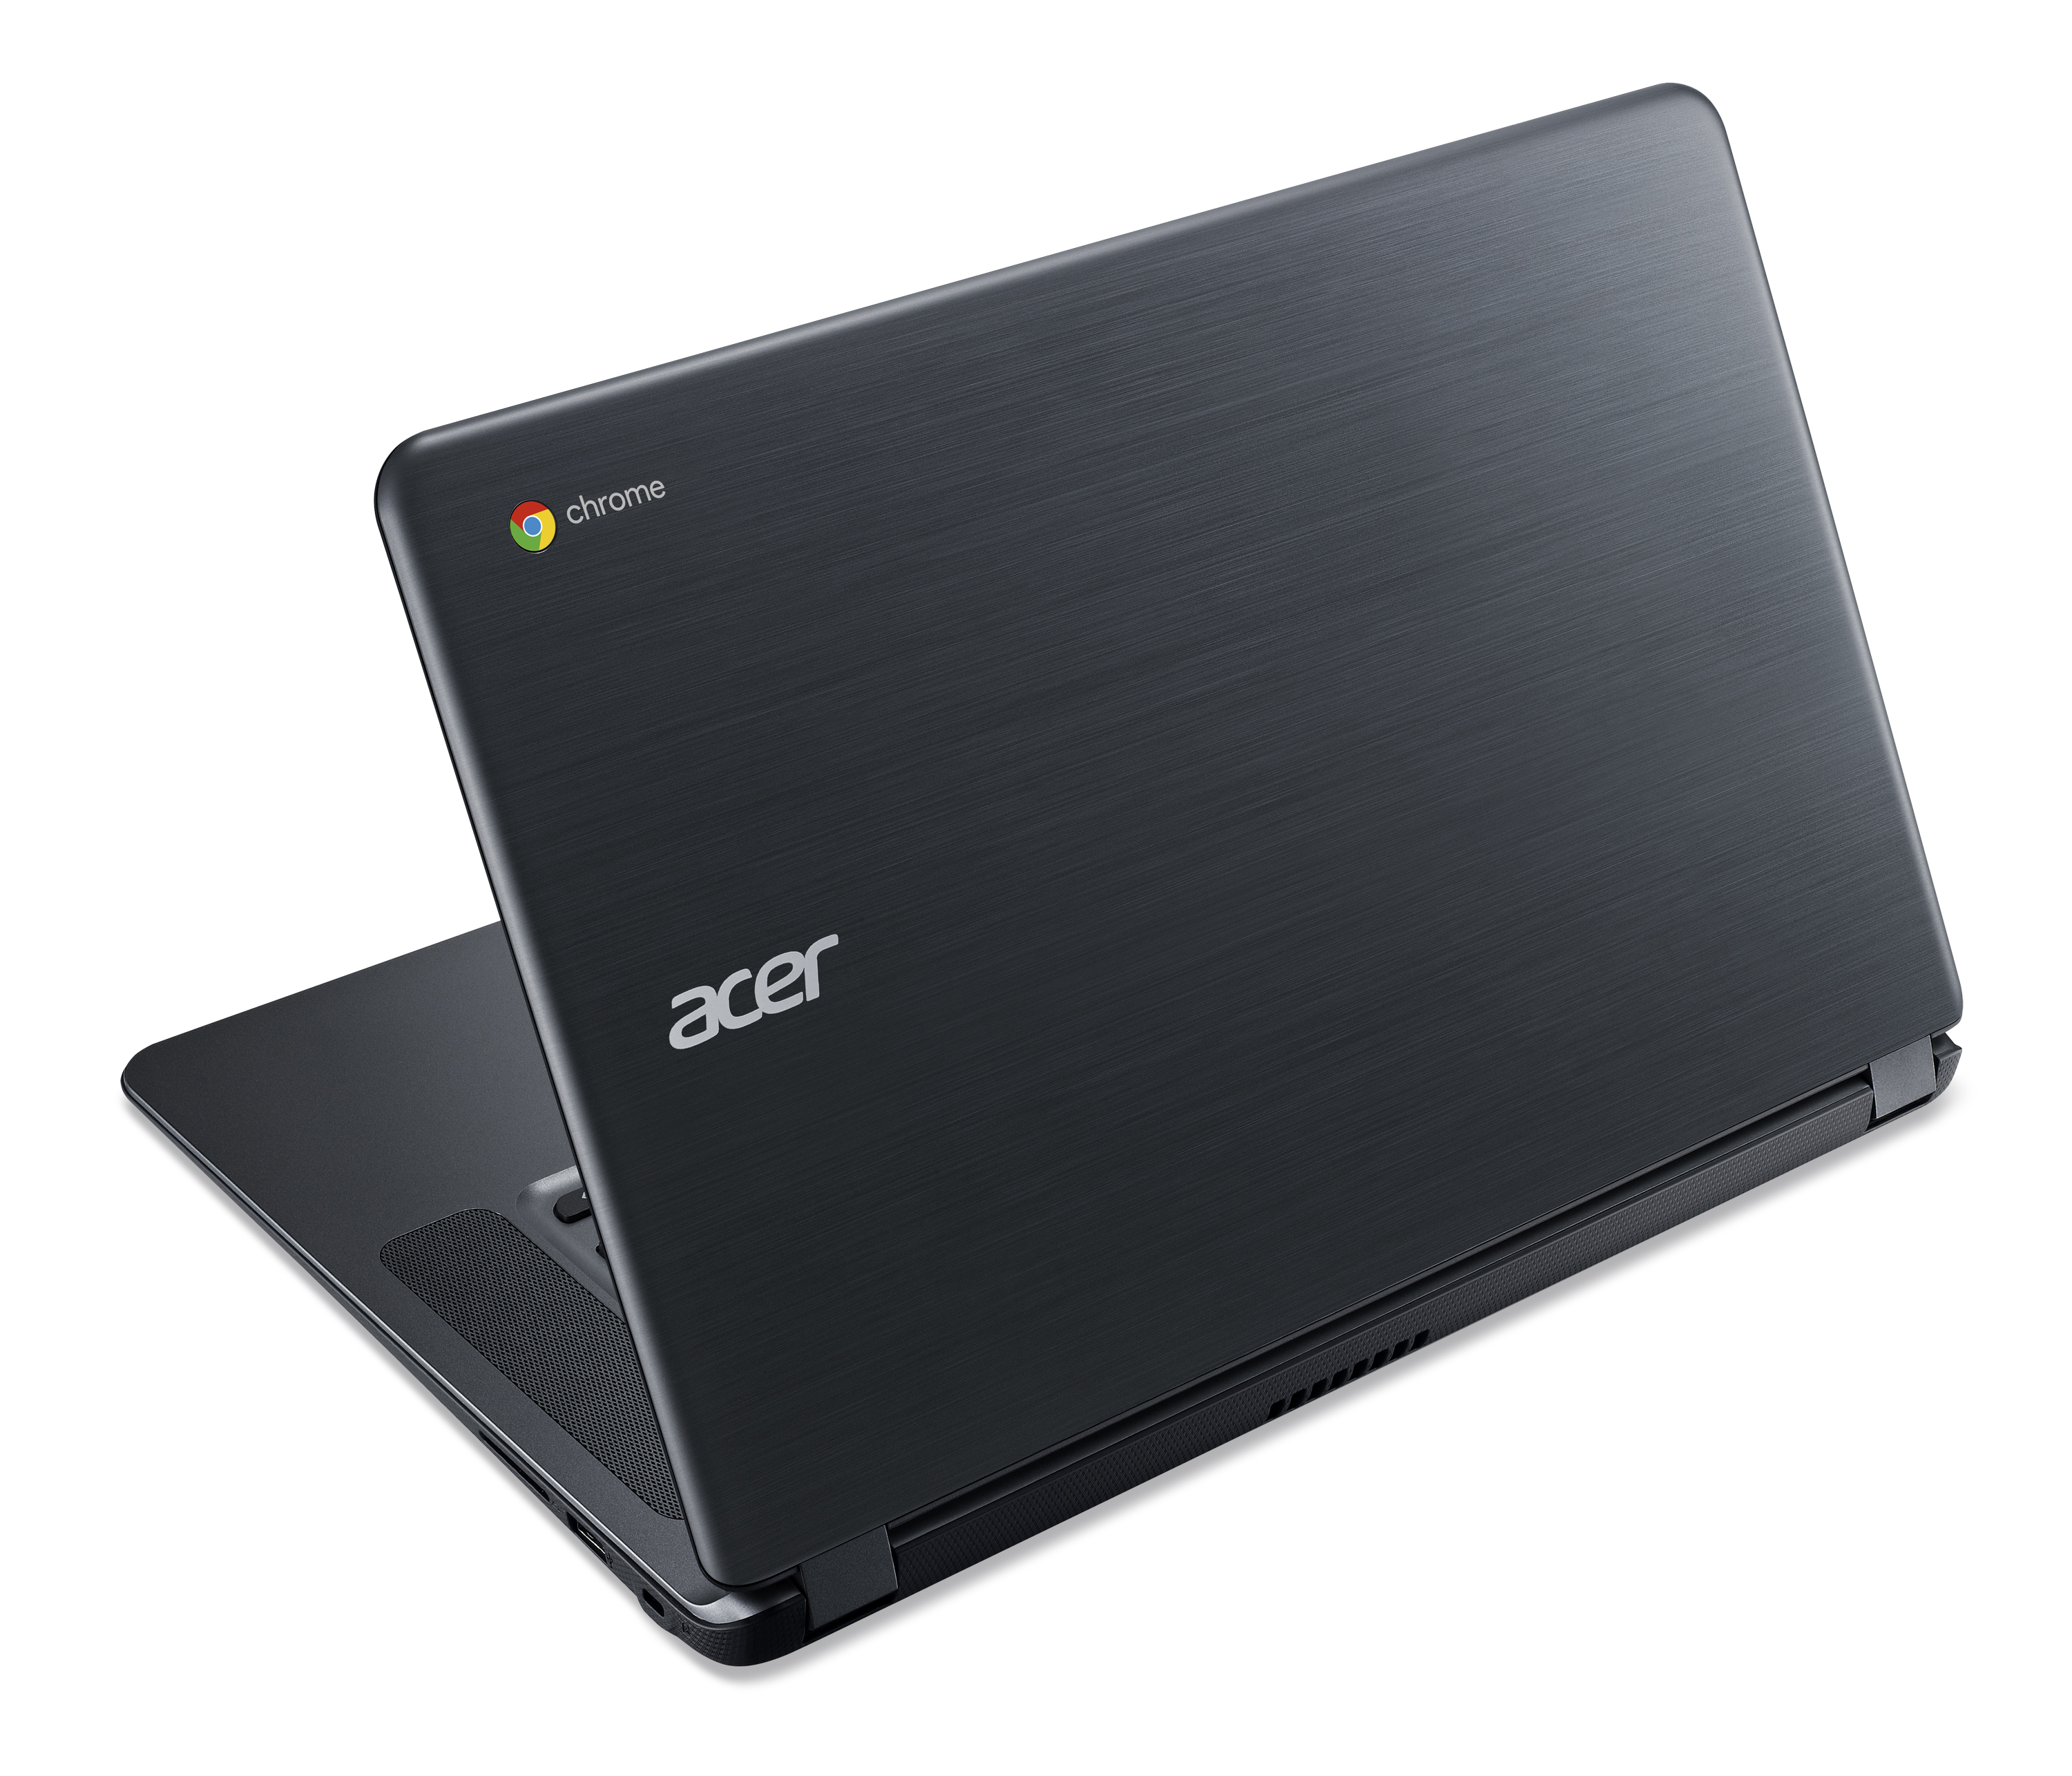 Acer CB3-532-C47C 15.6" Chromebook, Intel Celeron N3060 Dual-Core Processor, 2GB RAM, 16GB Internal Storage, Chrome OS - image 5 of 7